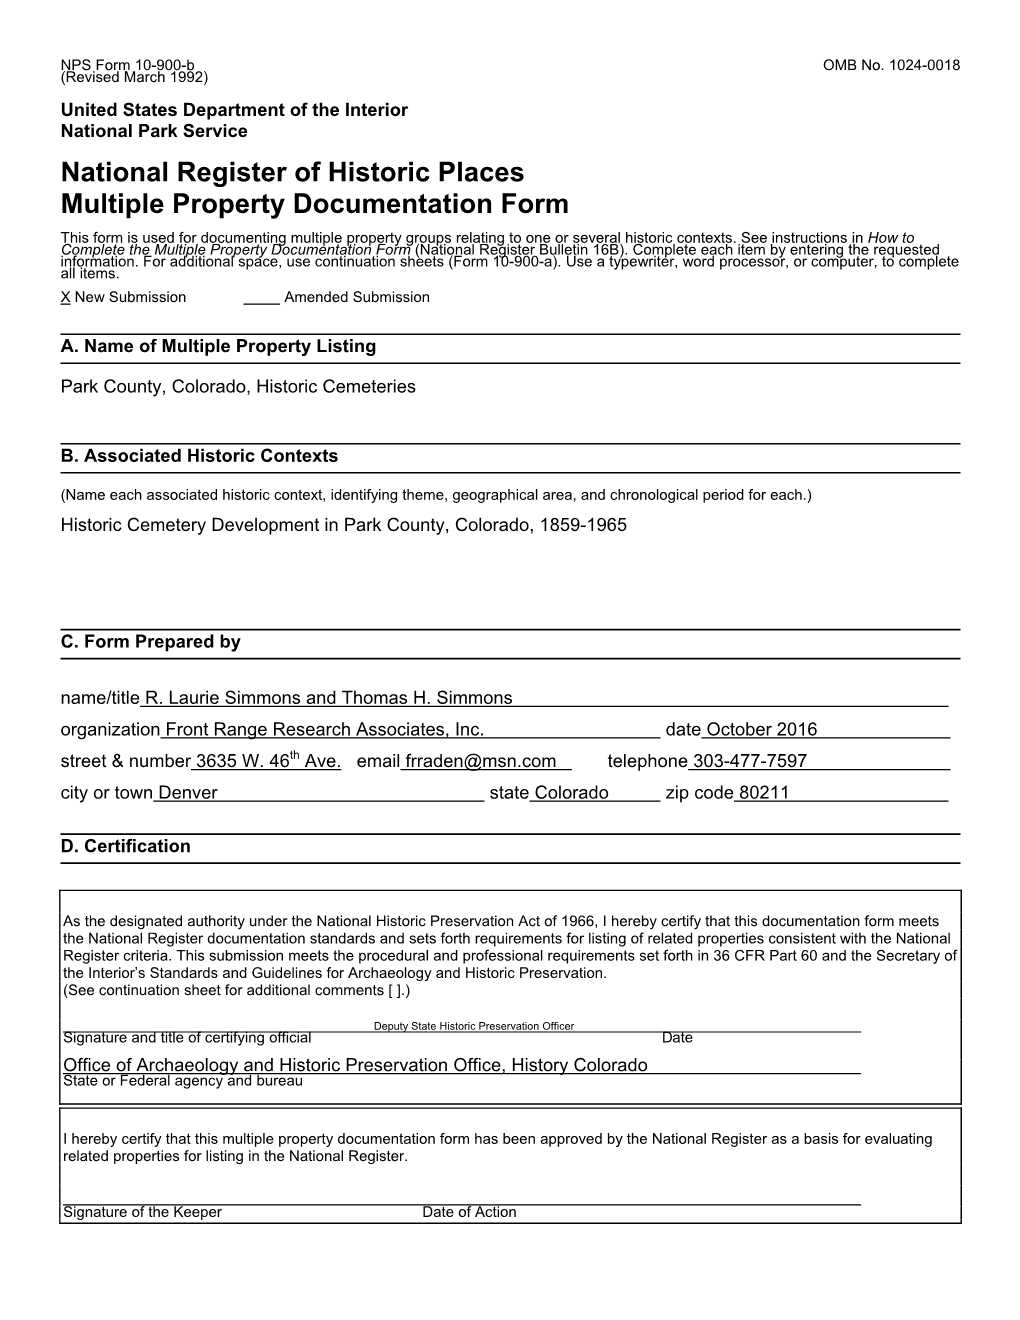 National Register of Historic Places Multiple Property Documentation Form